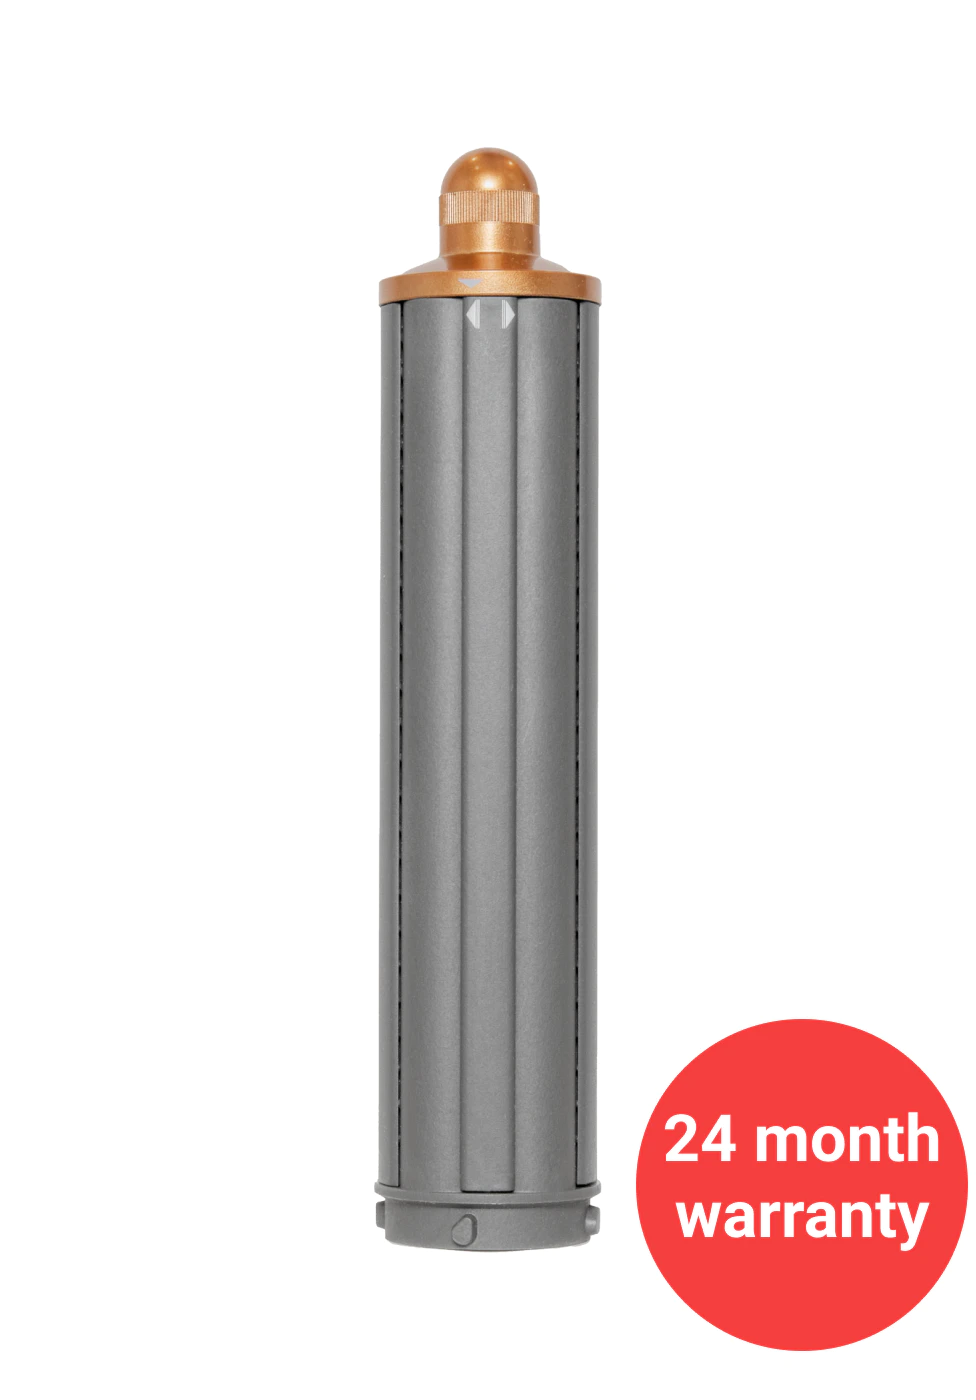 Phụ kiện đầu uốn tóc Dyson Airwrap Long Barrel 1.6inch 40mmm - Copper